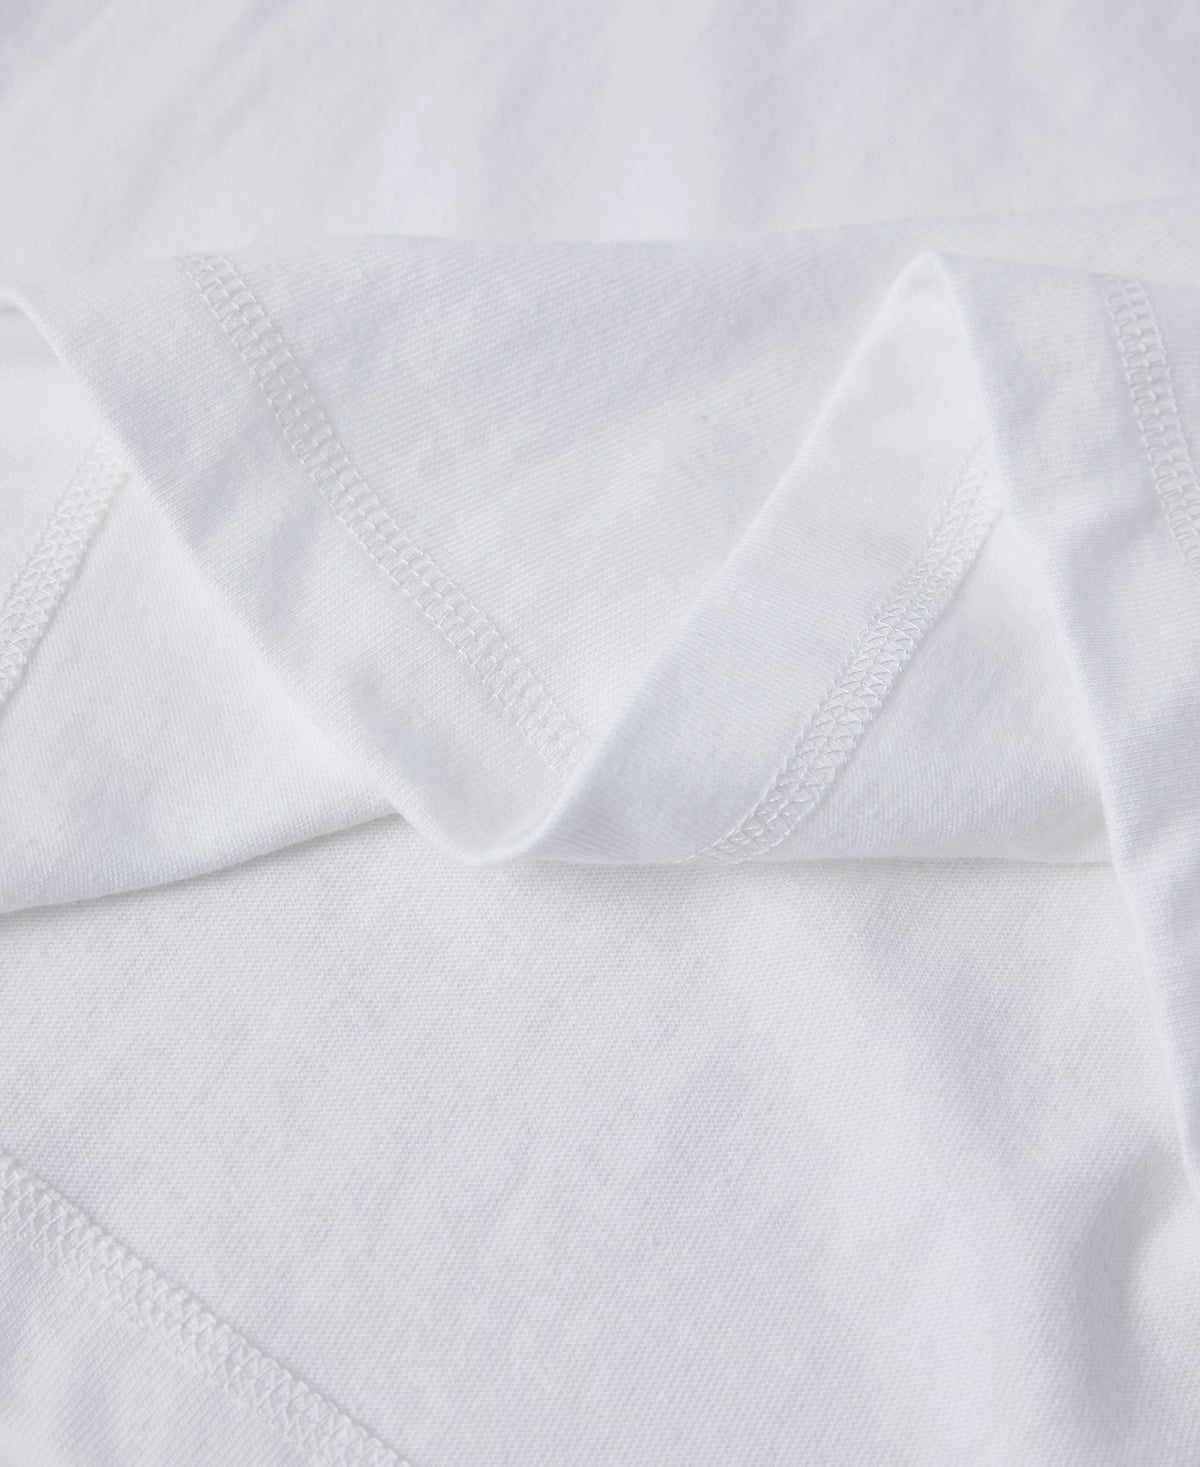 7.2 oz Cotton Contrast-Tipped Tubular Raglan V-Gusset T-Shirt - Black/White